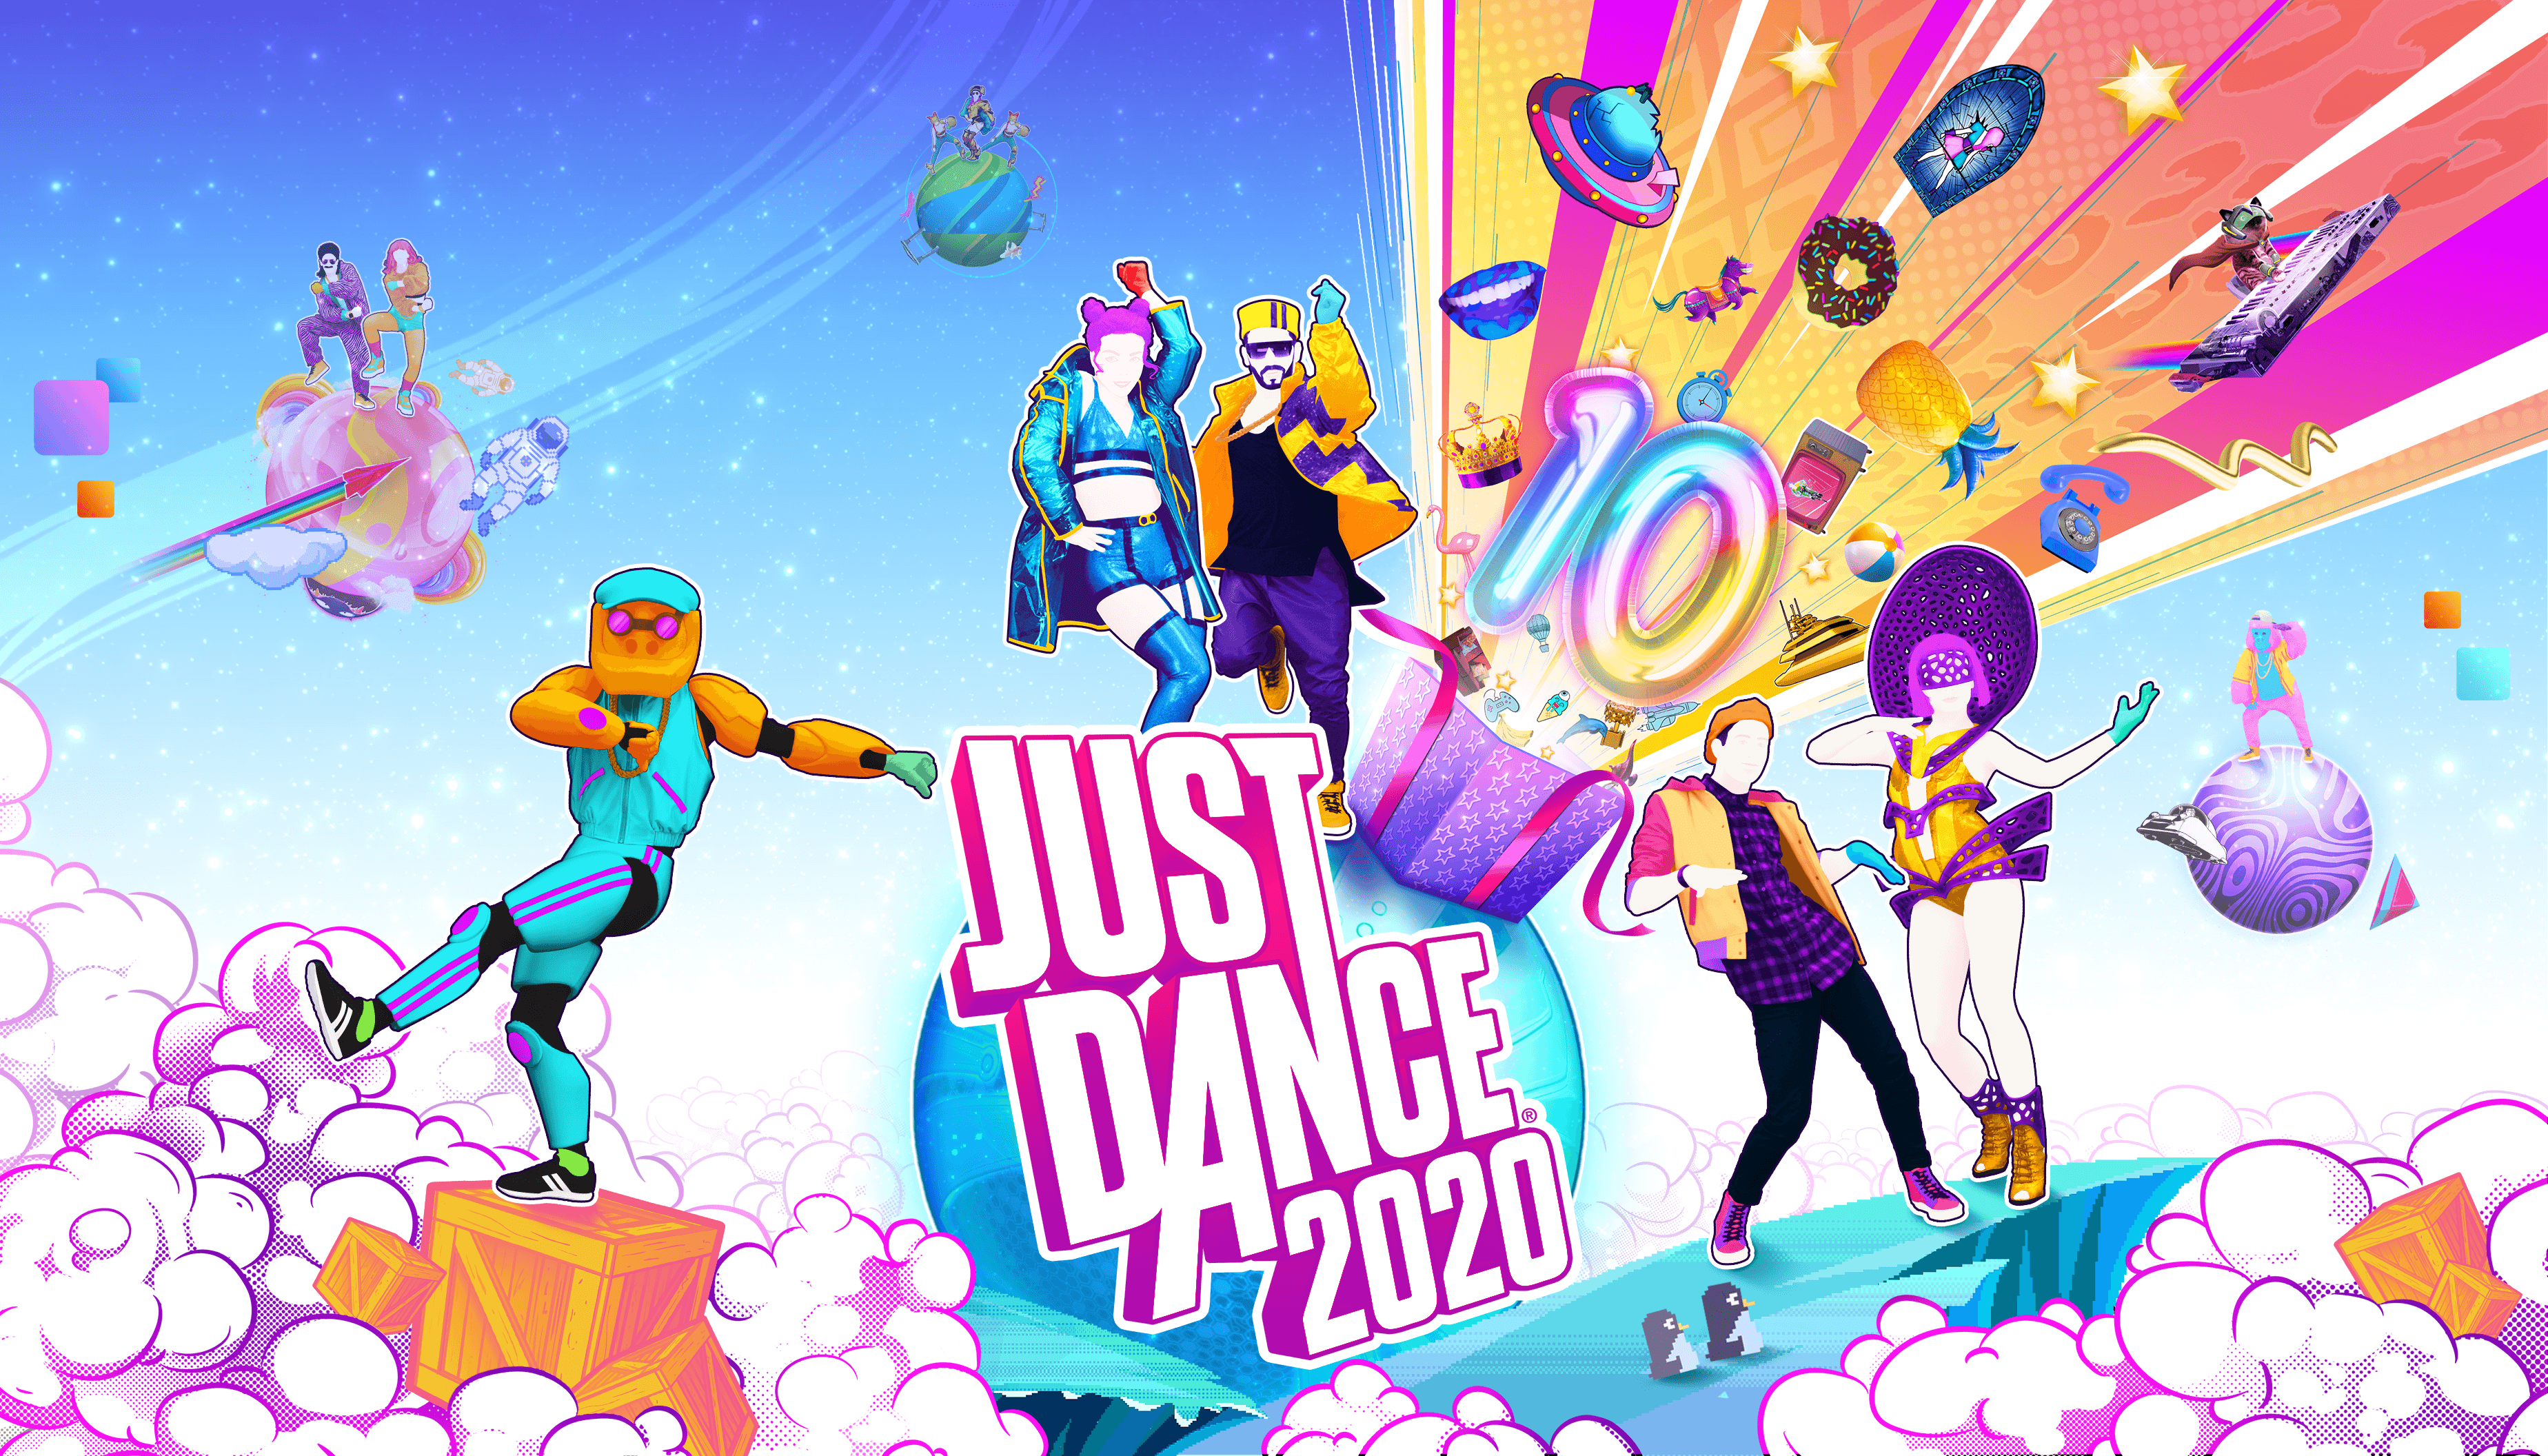 Just Dance 2020 HD Wallpaper. Background Imagex2112